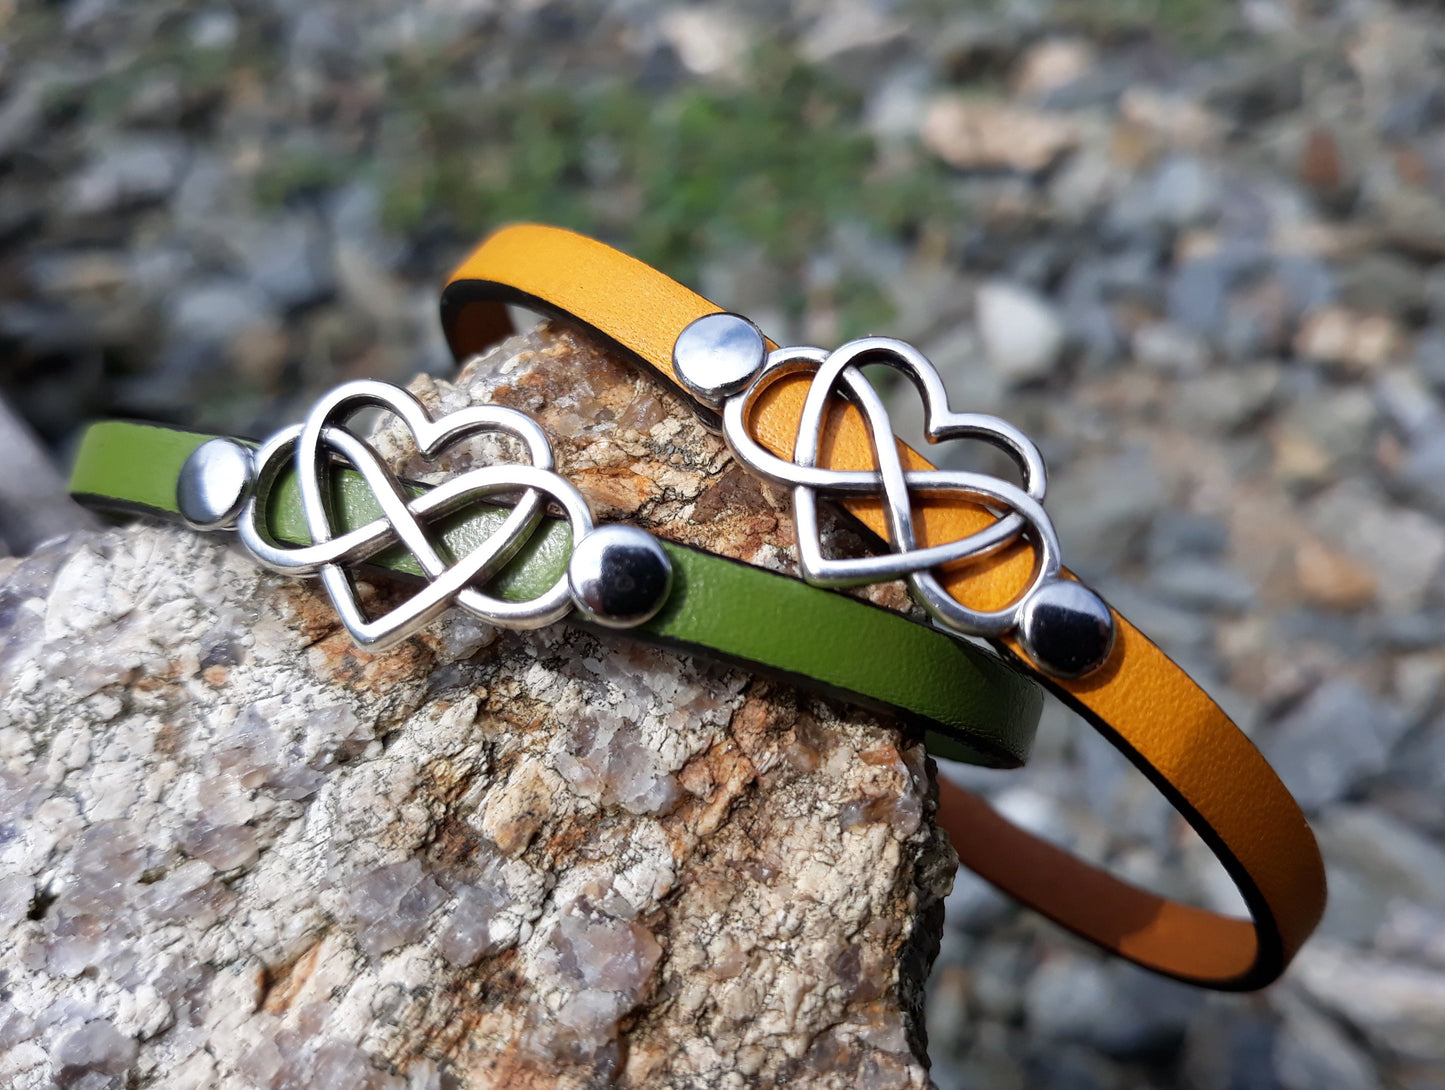 Celtic Infinity Heart Leather Bracelet